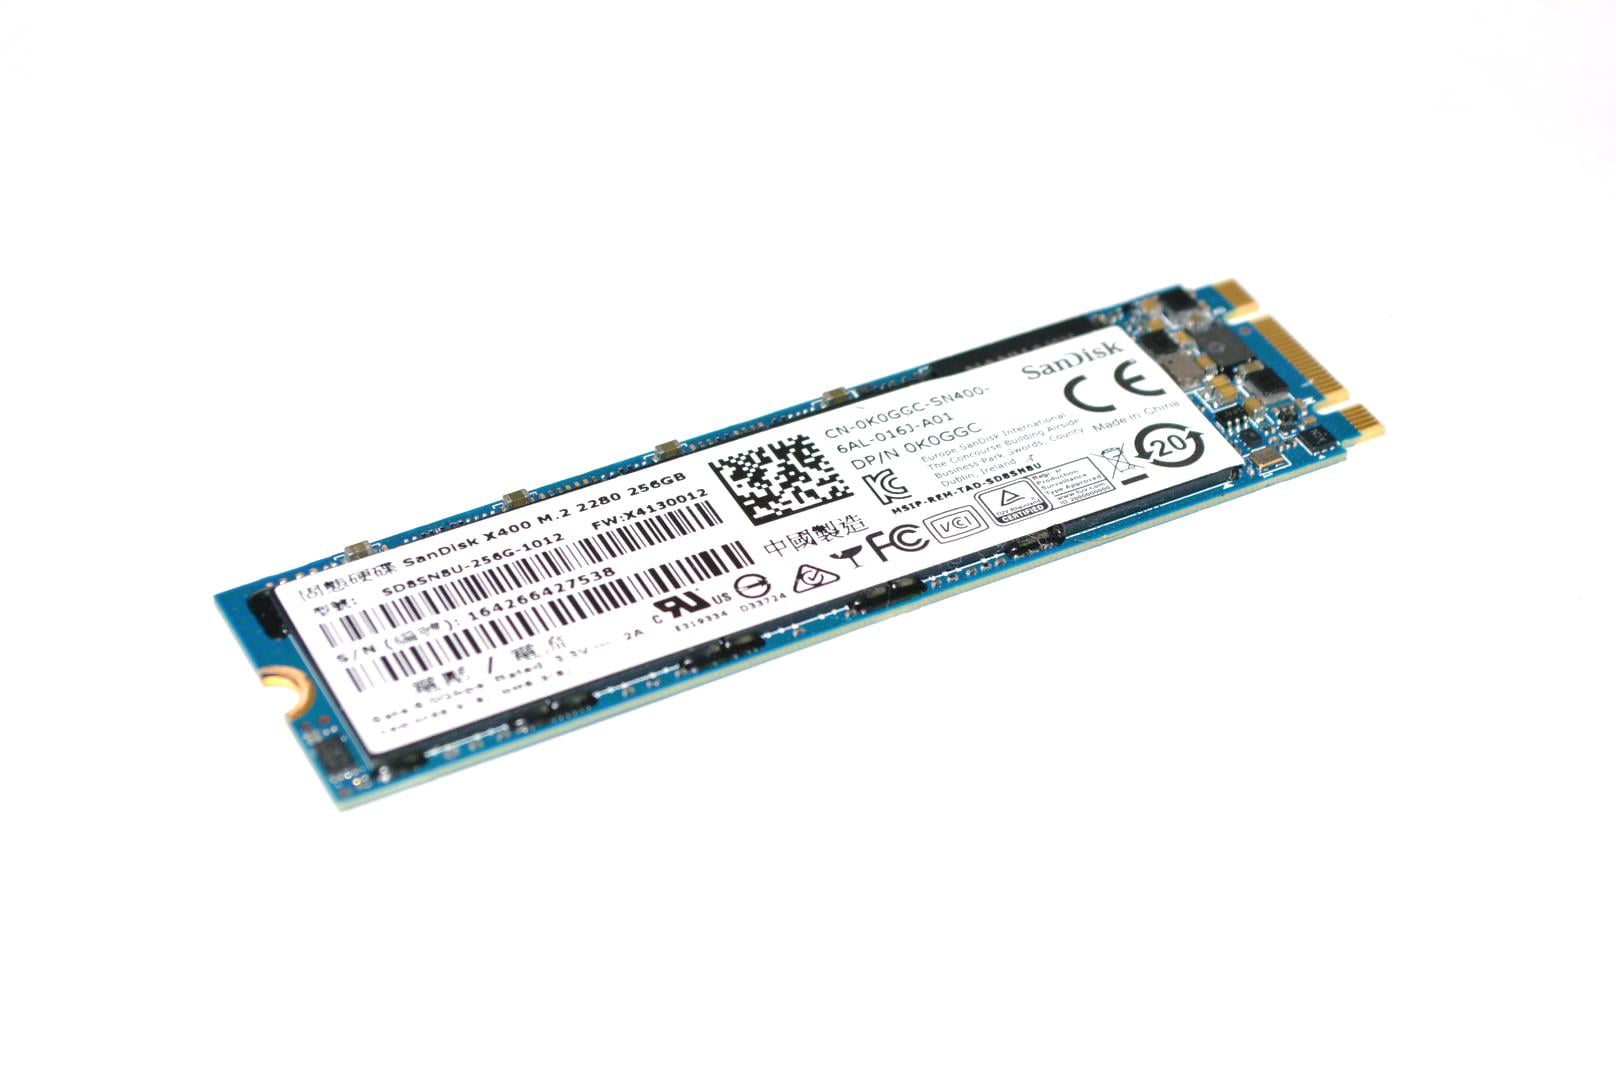 SanDisk X400 SD8SN8U-256G-1012 NVMe M.2 2280 PCIe SSD Solid State Drive - Walmart.com